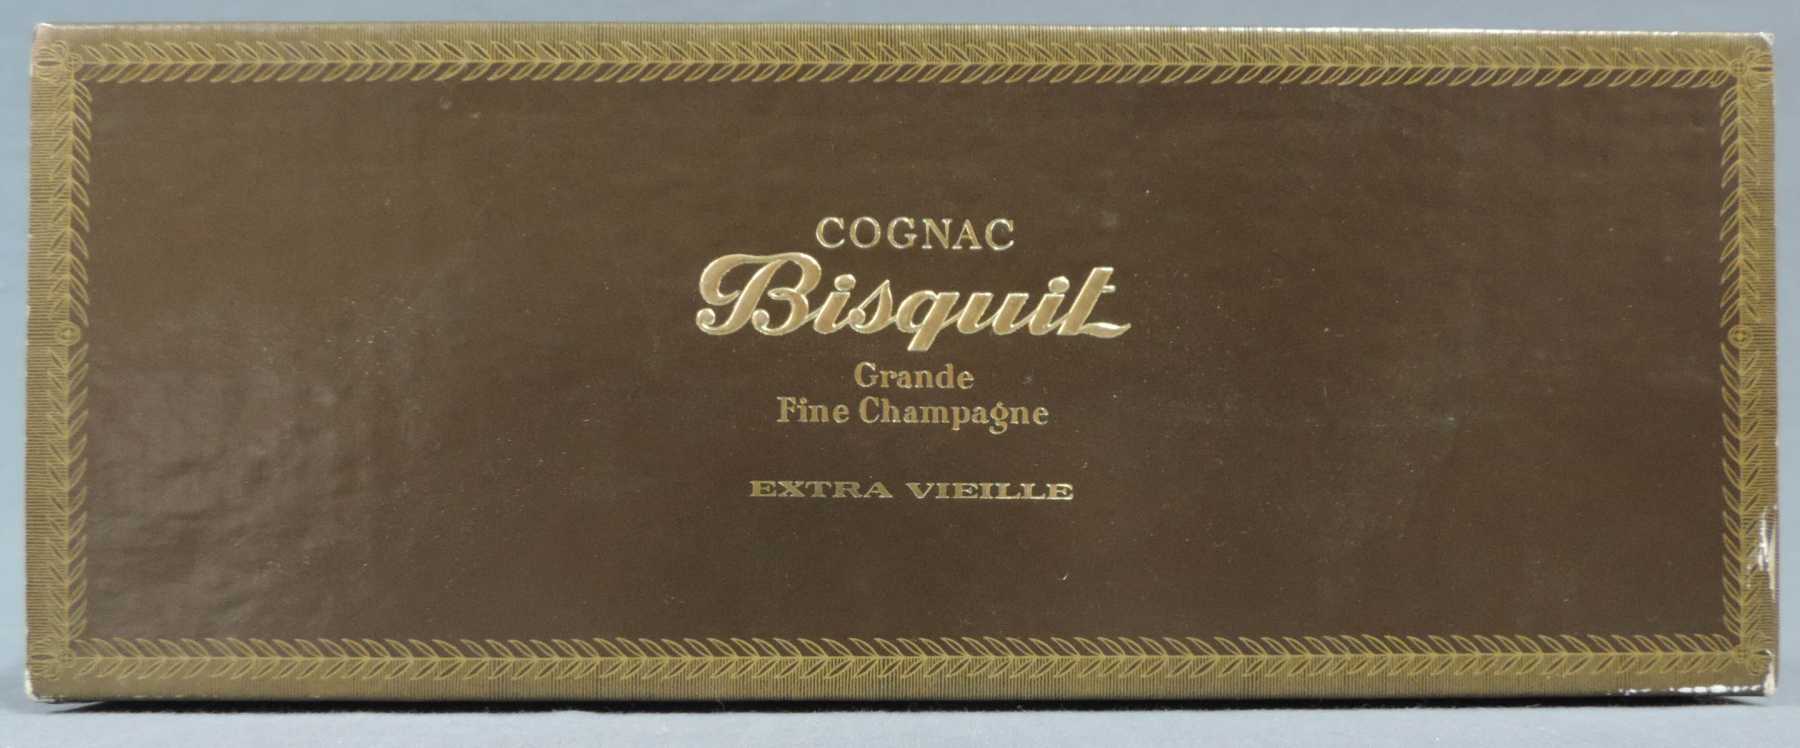 Grande Fine Champagne, Bisquit Dubouche Cognac Grande Fine Champagne, Extra Vieille. 40%, 70cl. - Image 3 of 10